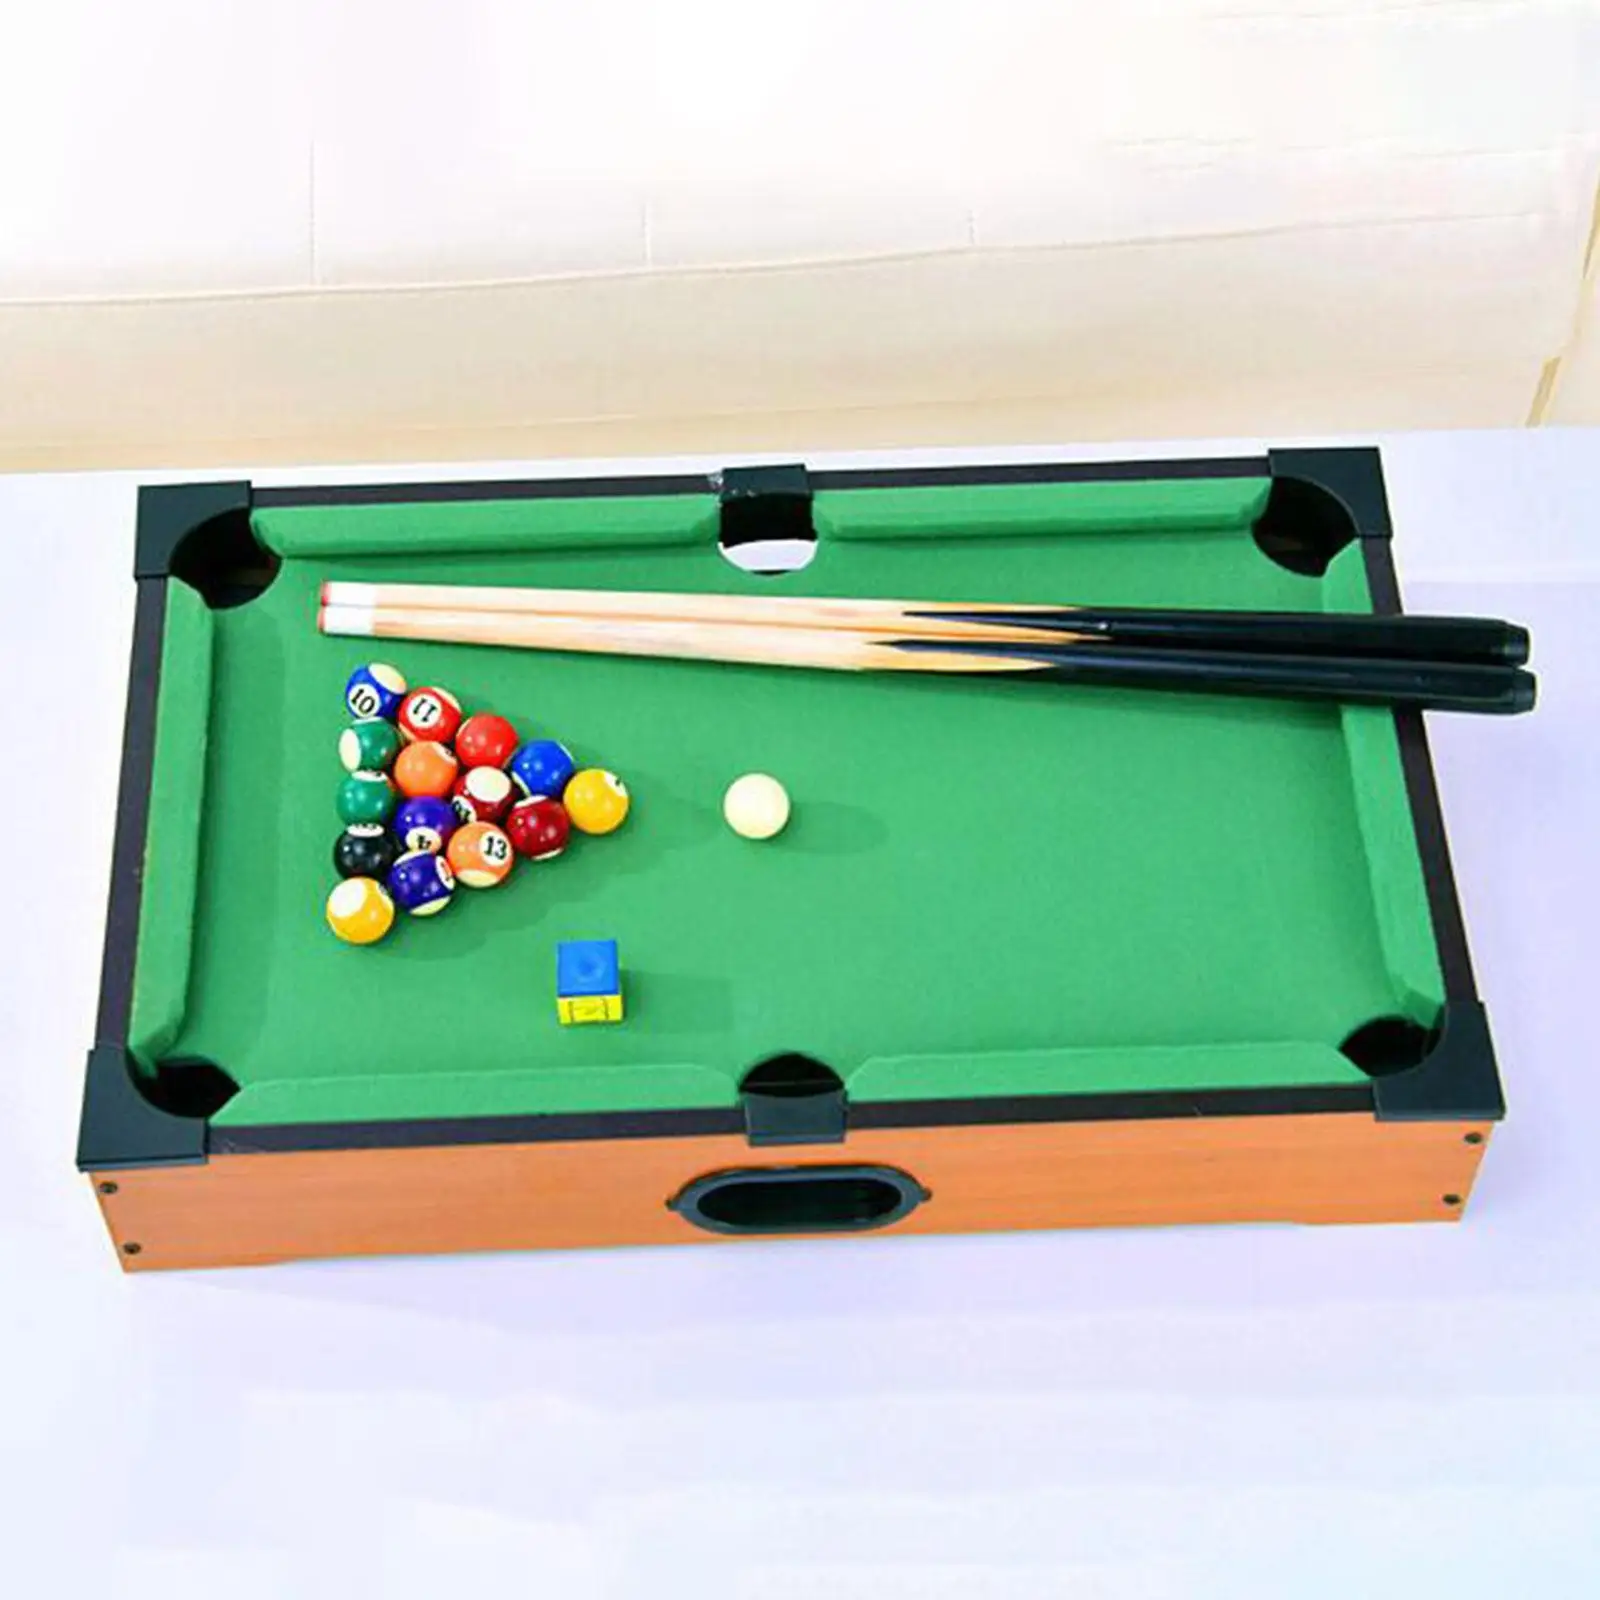 Mini Table Pool Miniature Billiard Game Balls Home Play with Game Balls Snooker Wood for Playroom Desktop Game Room Kids Gift